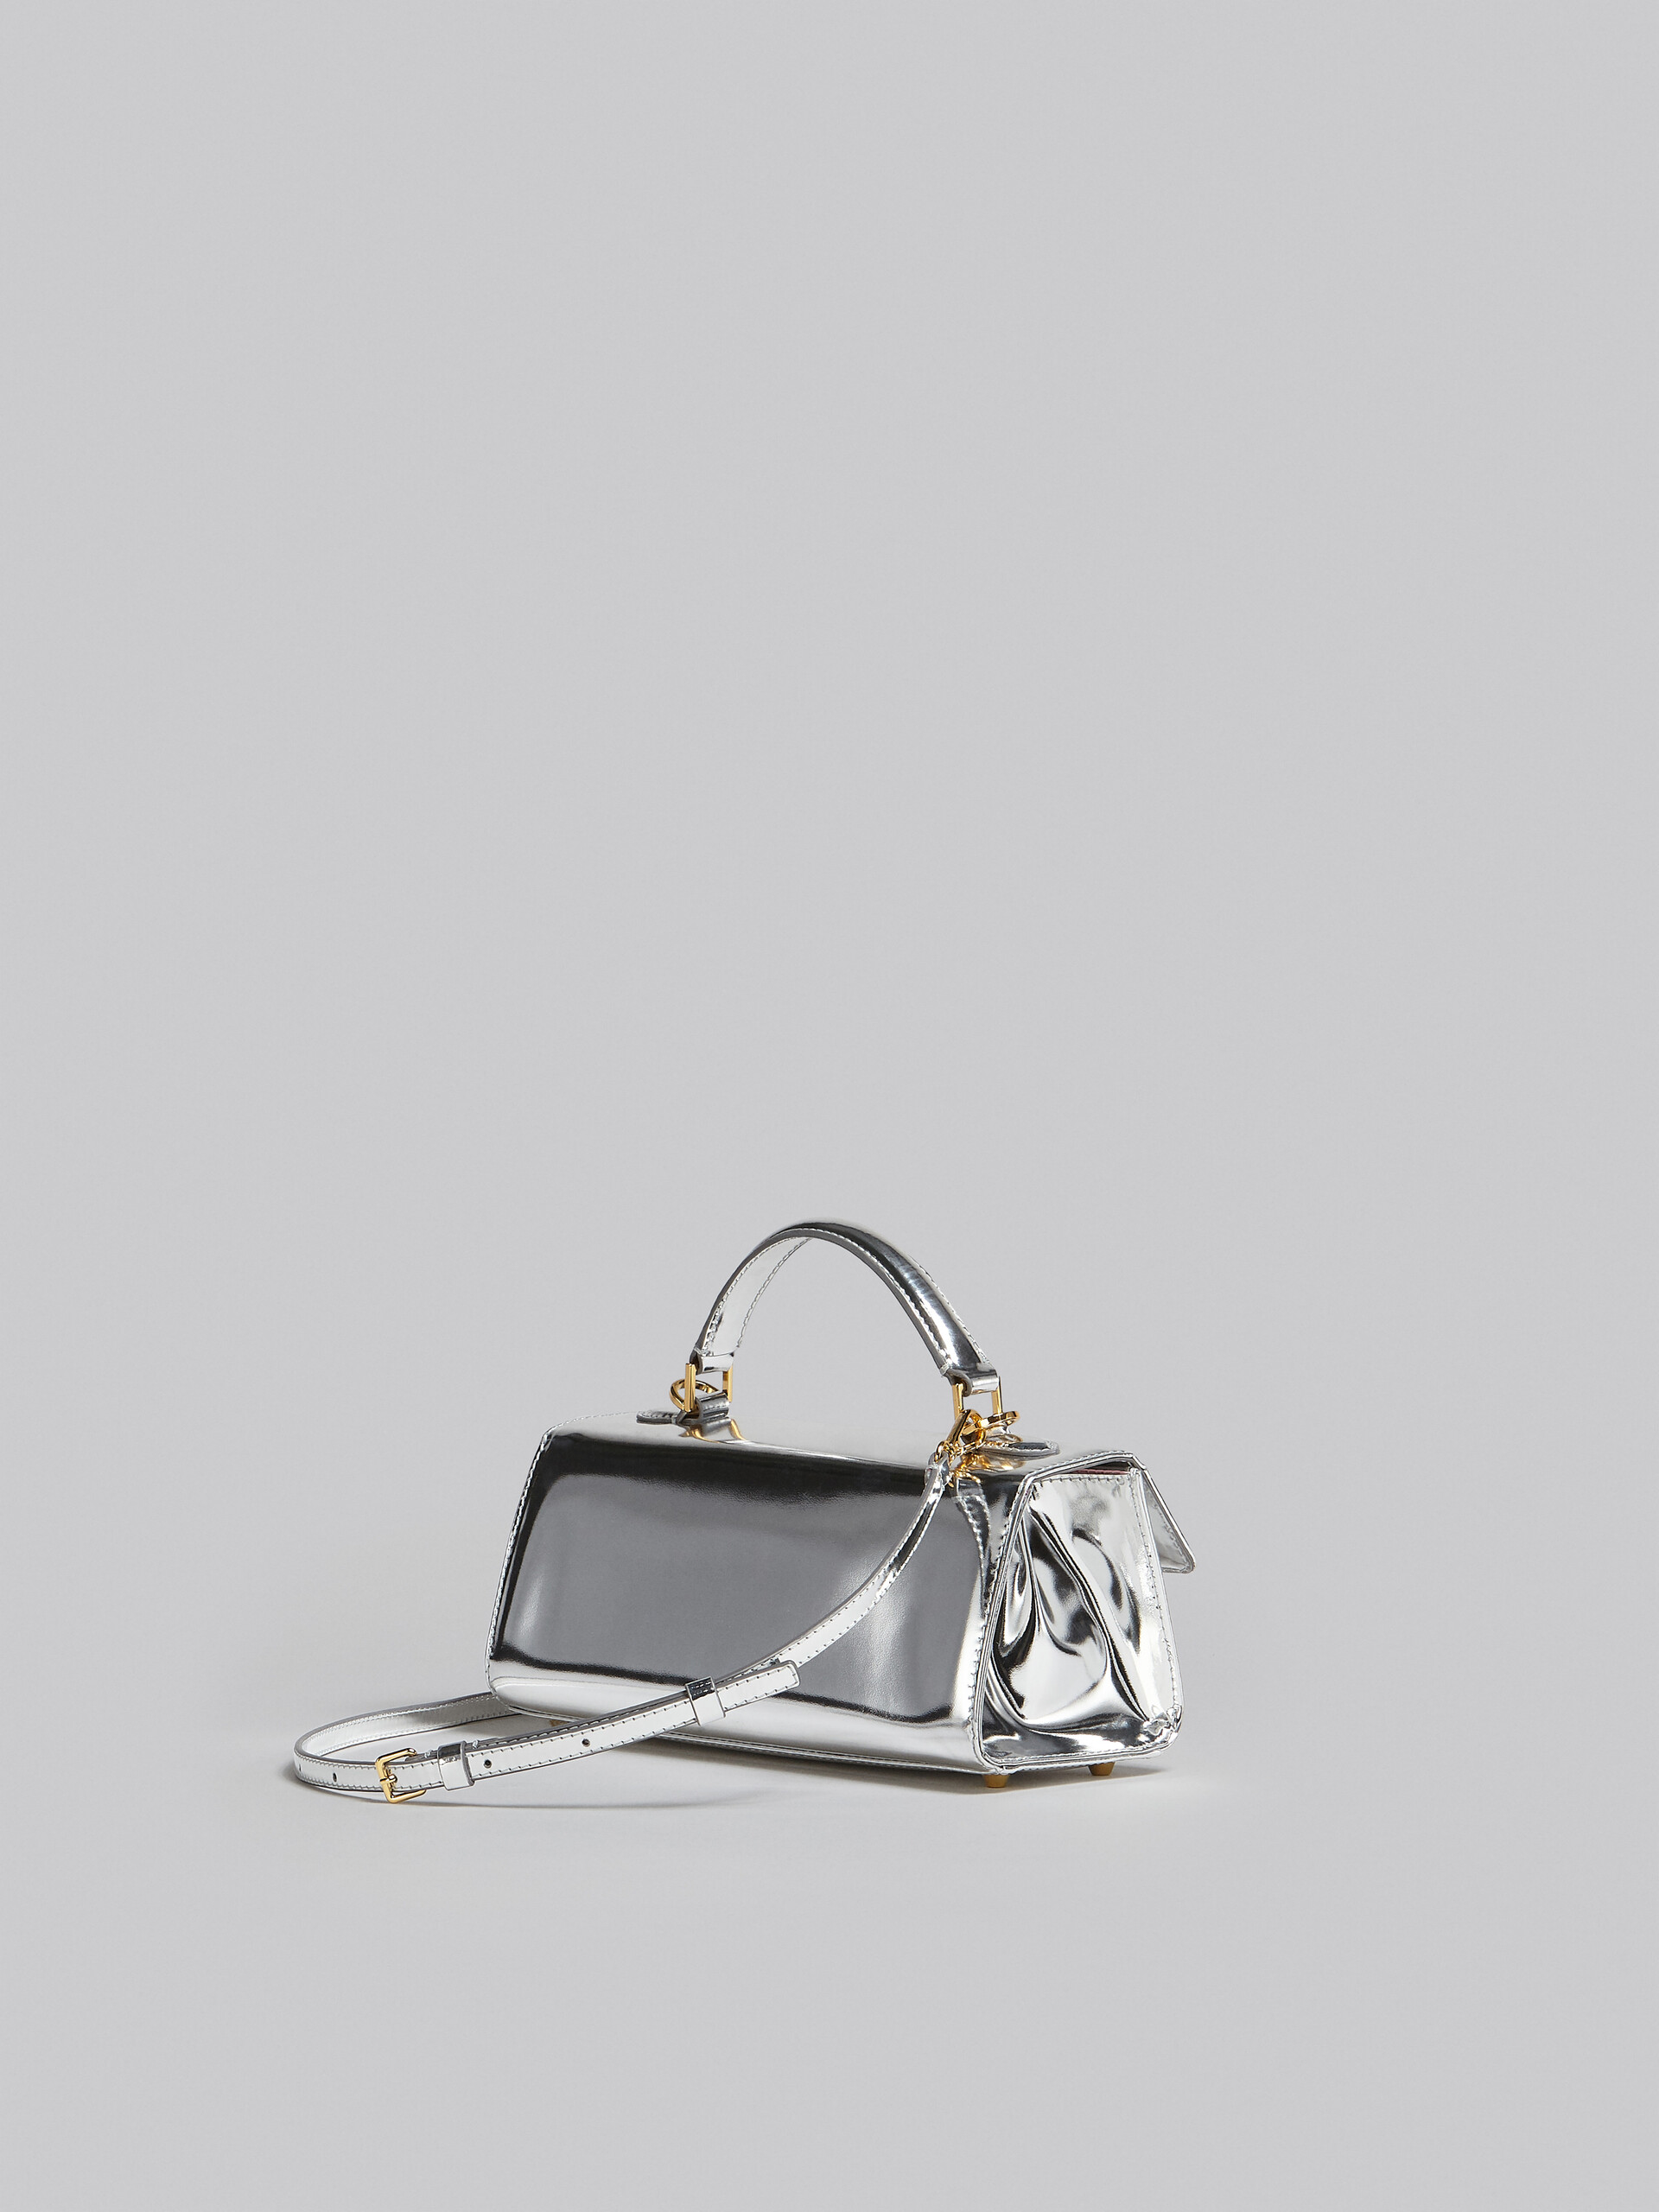 Relativity Medium Bag in silver mirrored leather - Handbags - Image 2